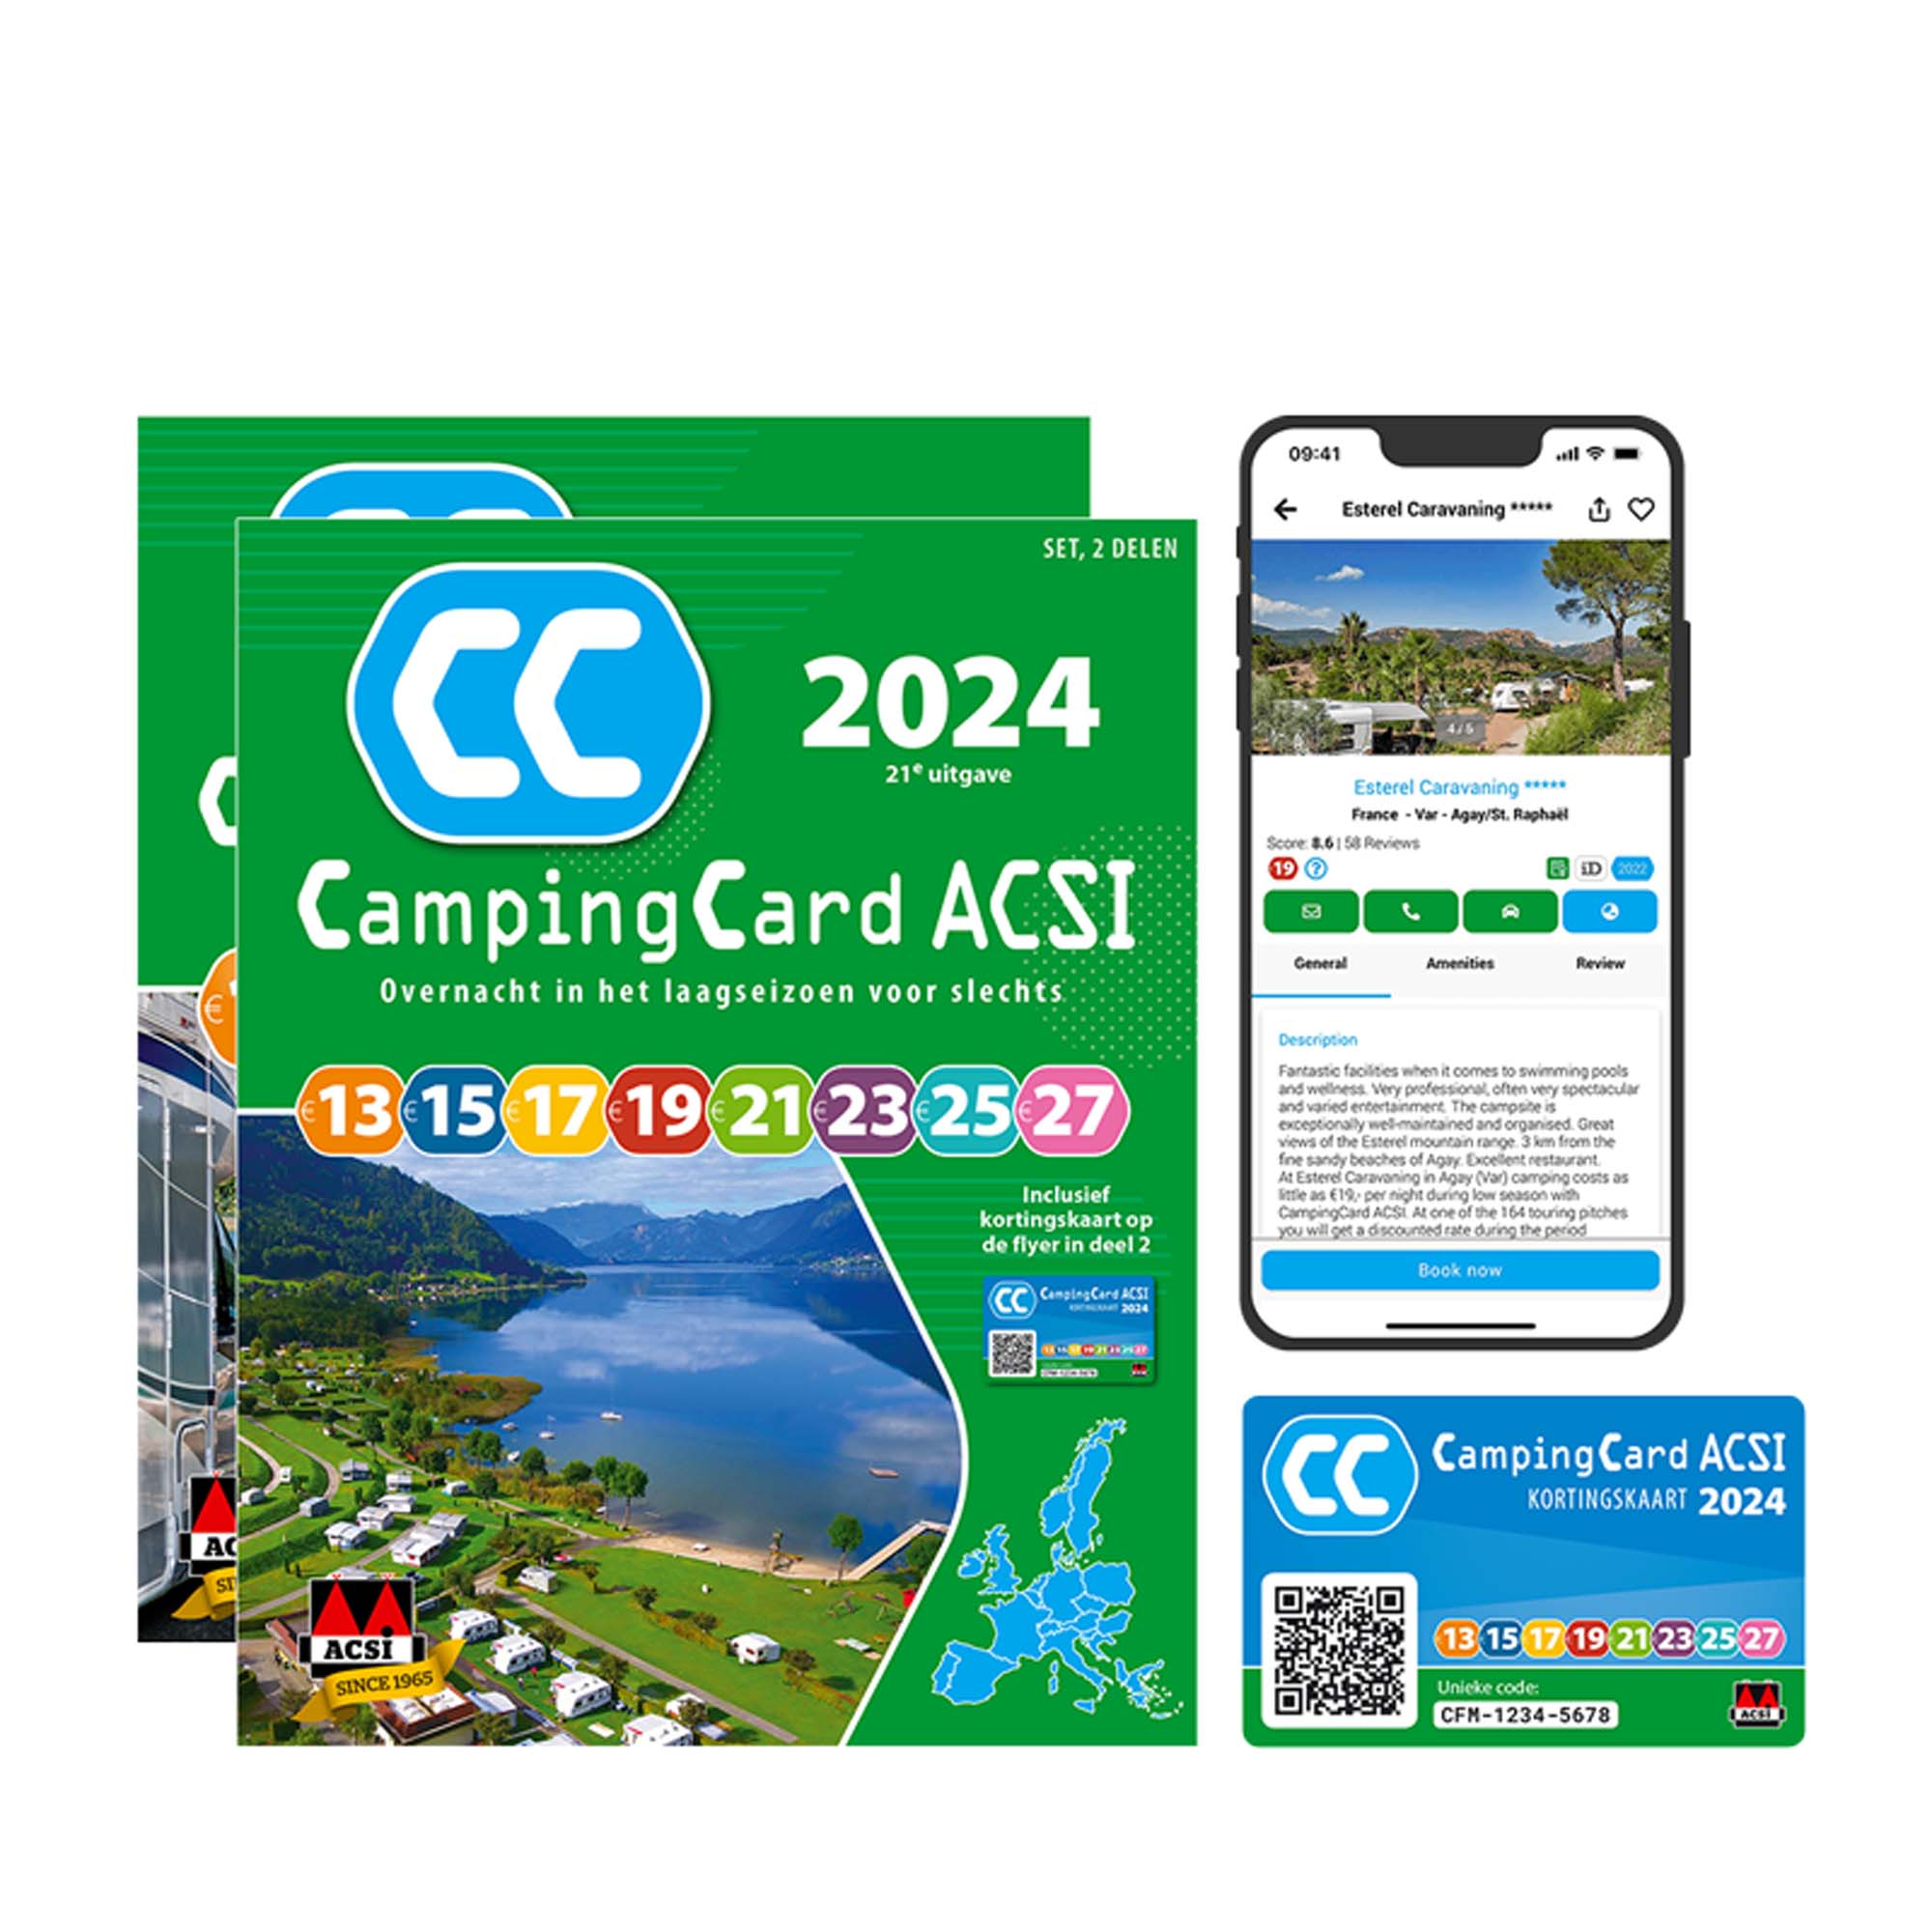 ACSI campingcard 2024 nederlandstalig